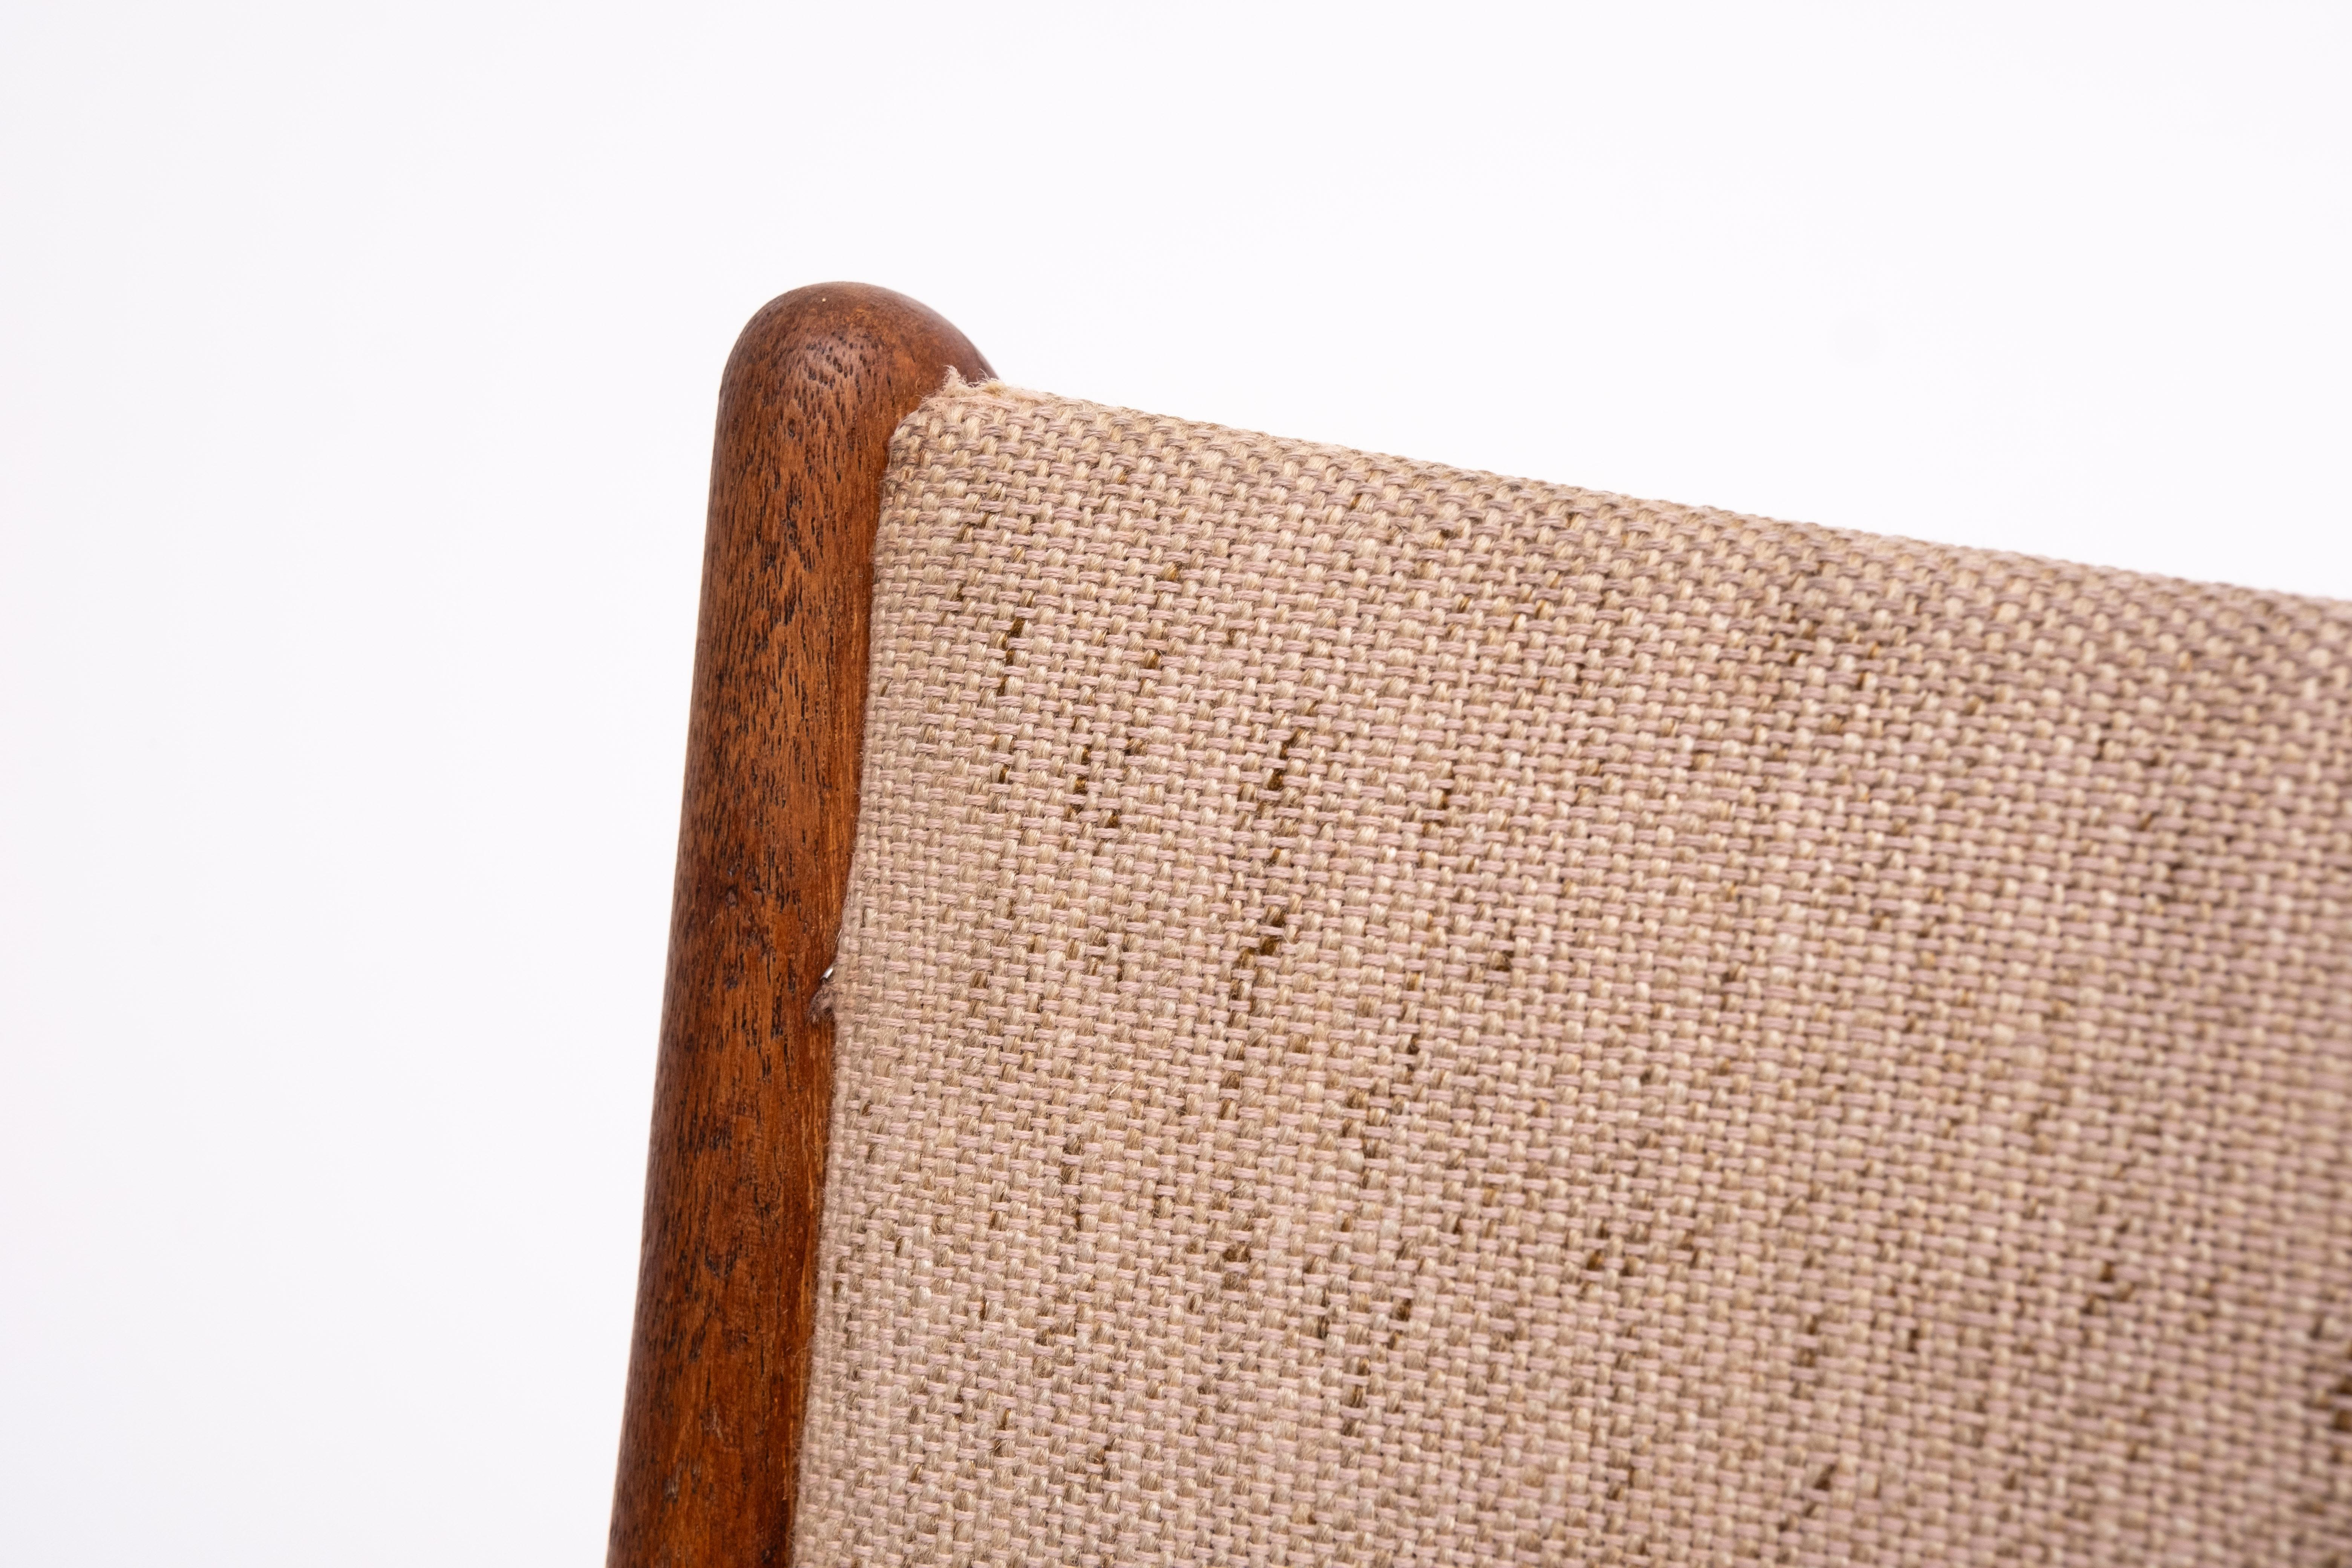  Very nice curved armchair .Solid Teakwood . Design by  Johannes Andersen  For Sale 2